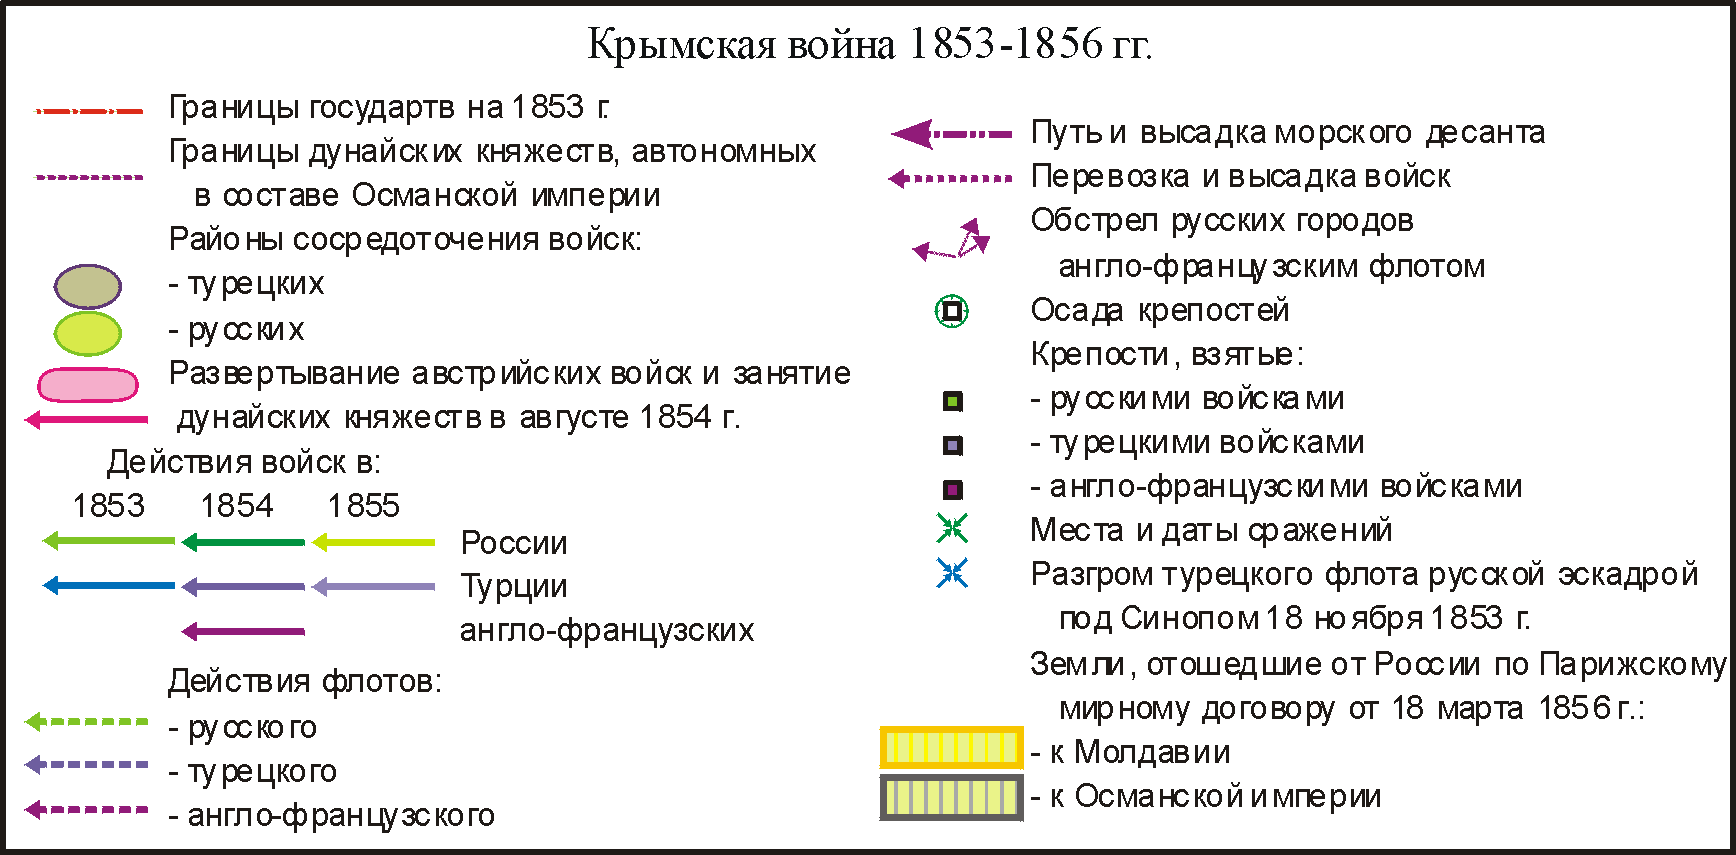 http://cont.ws/uploads/pic/2017/5/Crimean-war-1853-56-legend%20%281%29.png